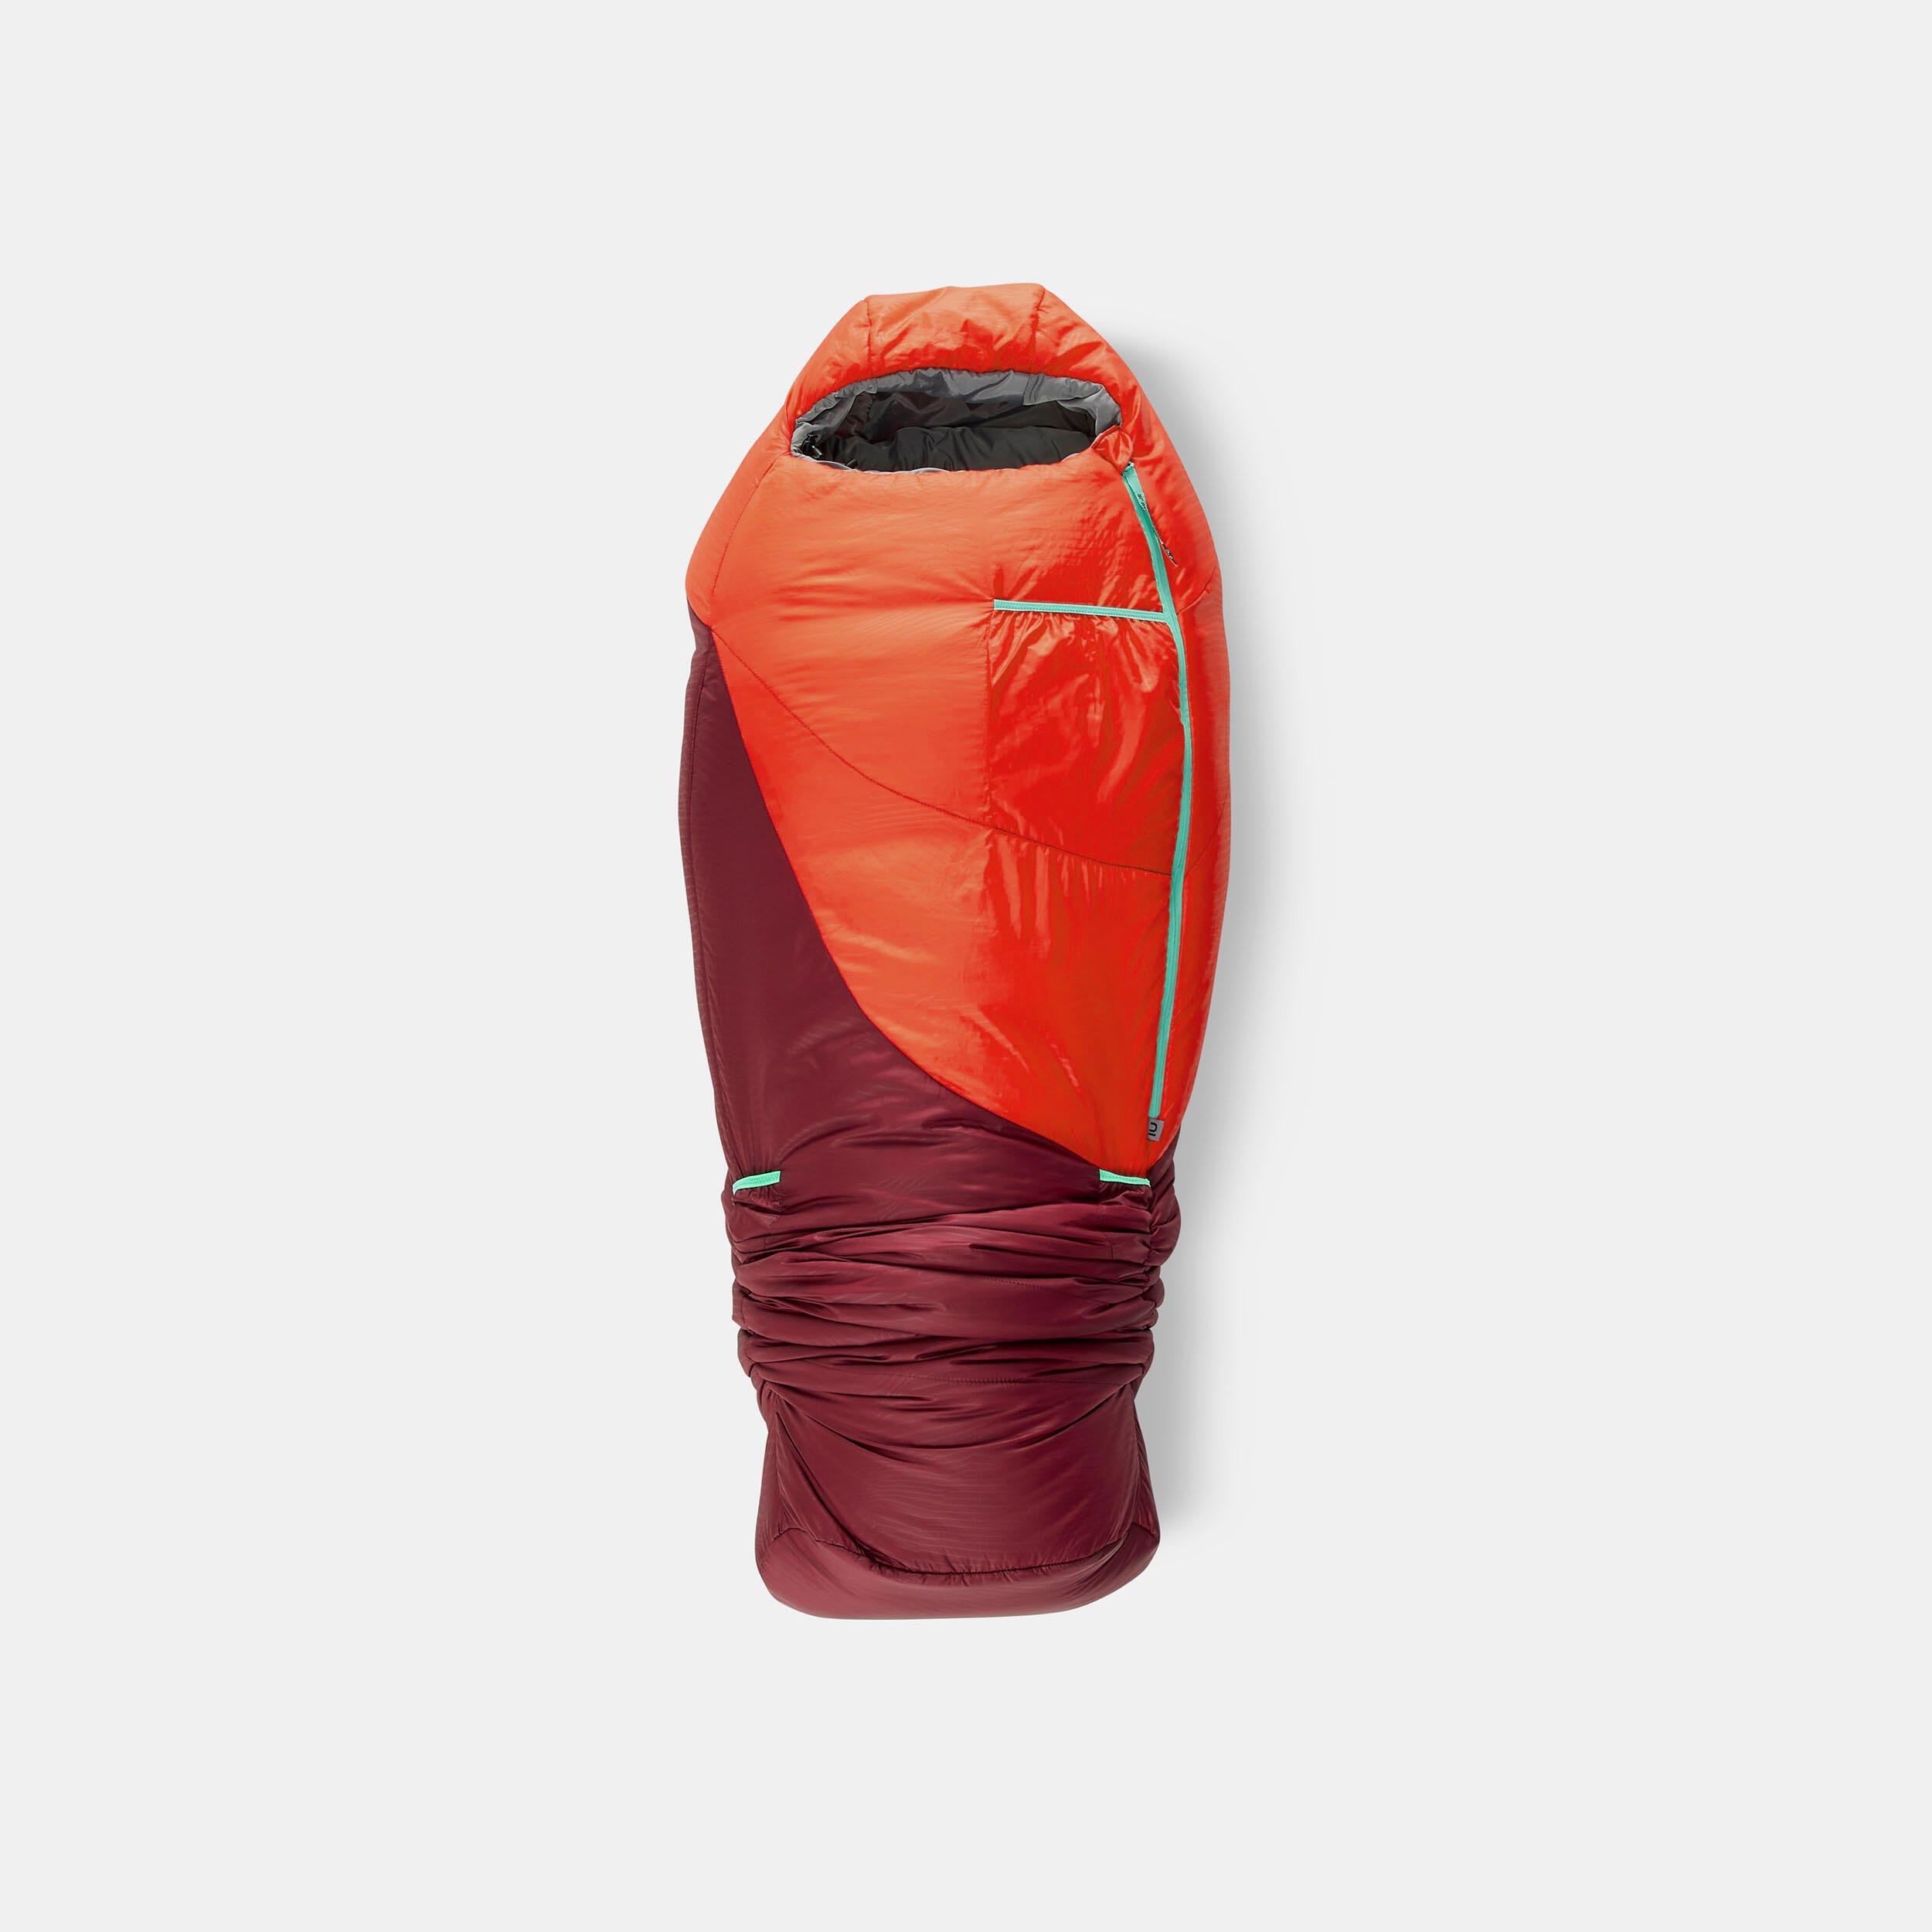 Children's Sleeping Bag MH500 0°C - red 4/10